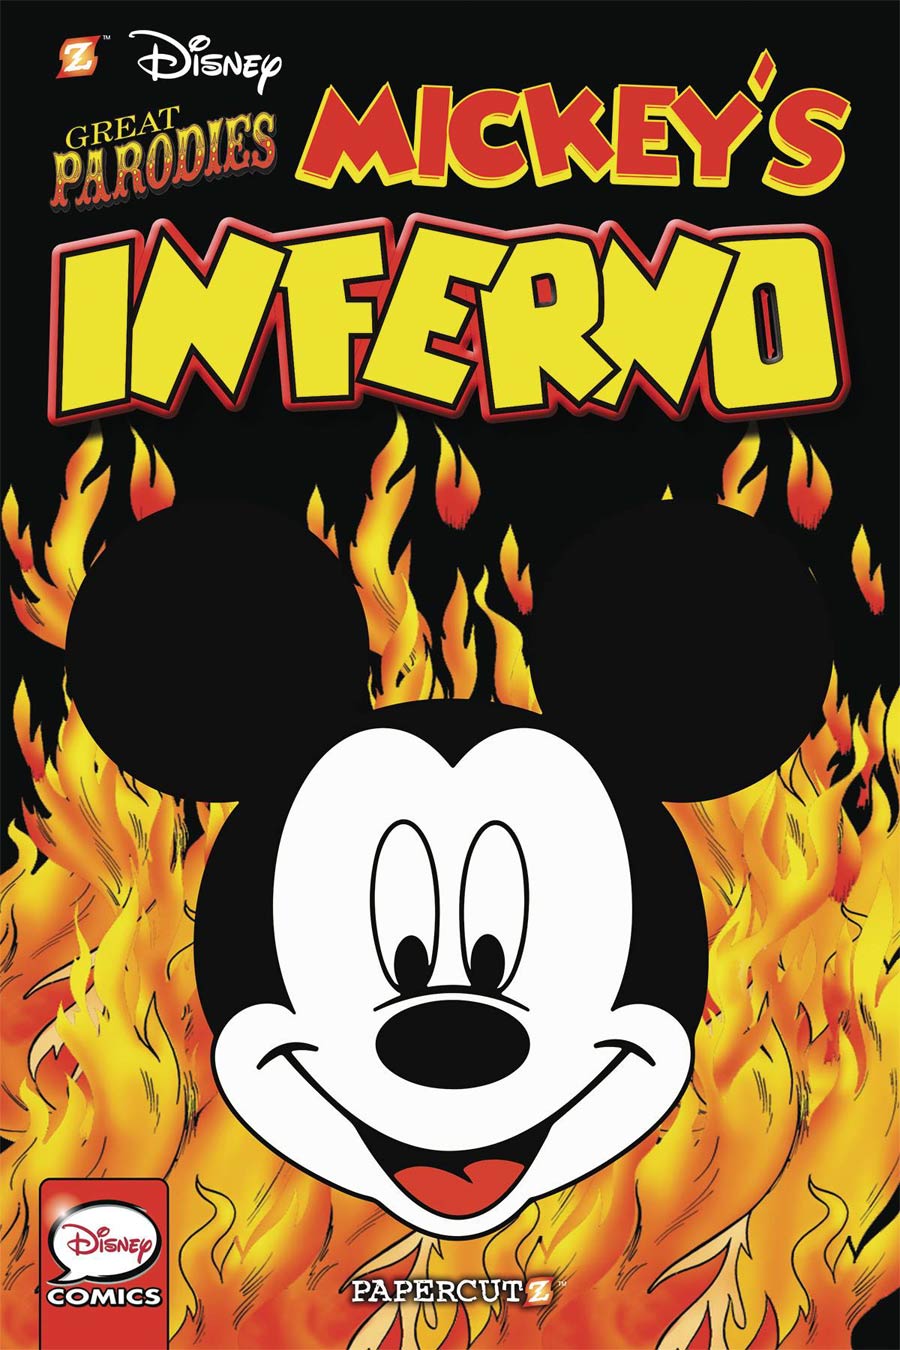 Disney Great Parodies Vol 1 Mickeys Inferno TP